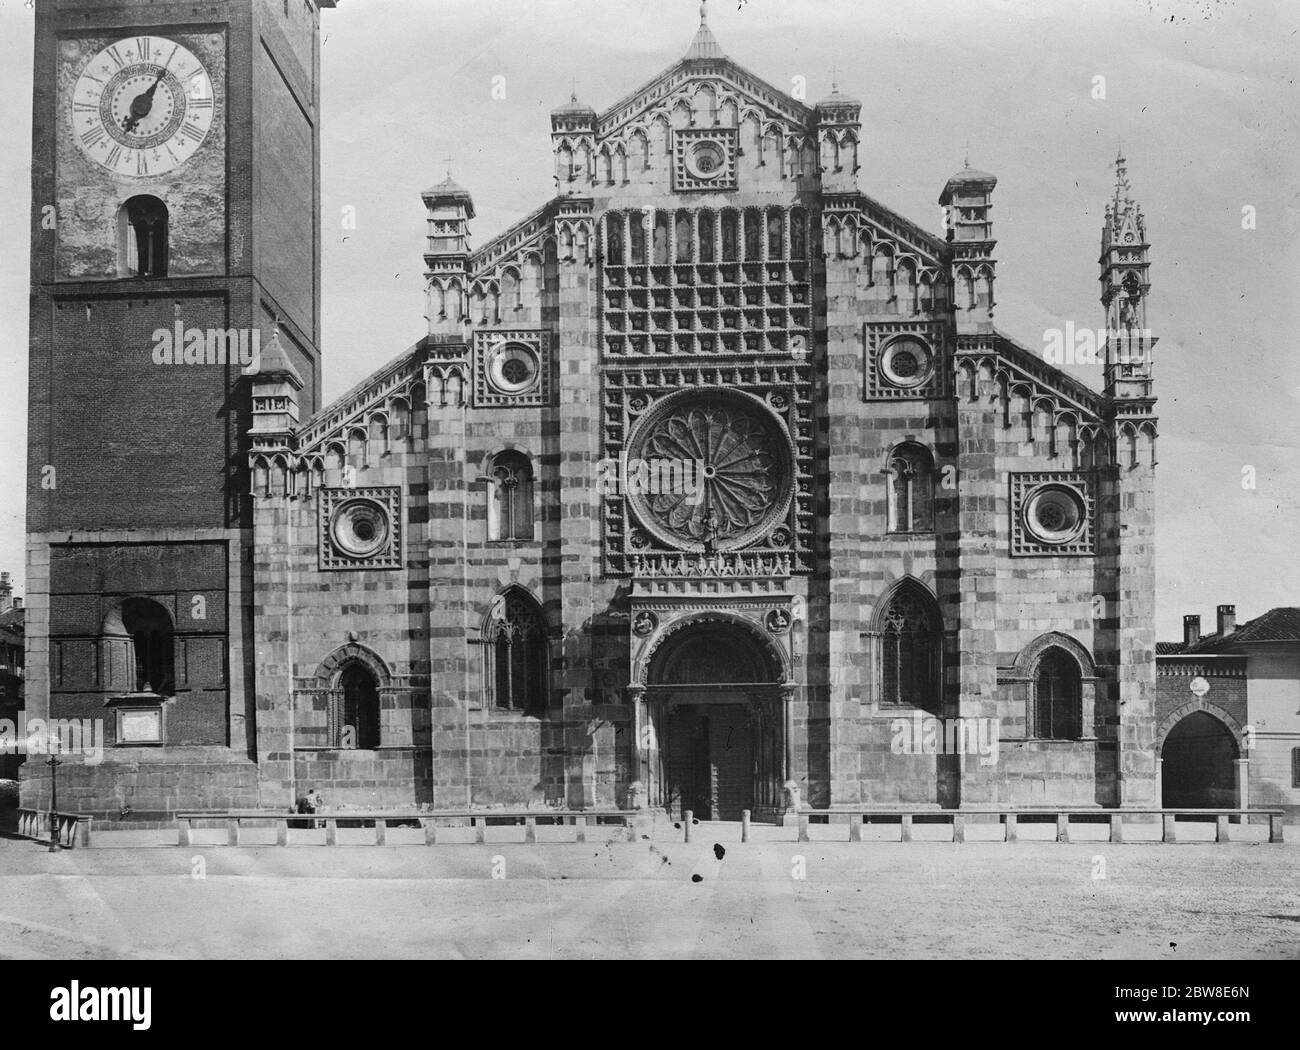 Diez muertos en ciclón. Famosa Catedral dañada. Catedral de Monza en Italia. 31 de agosto de 1928 Foto de stock